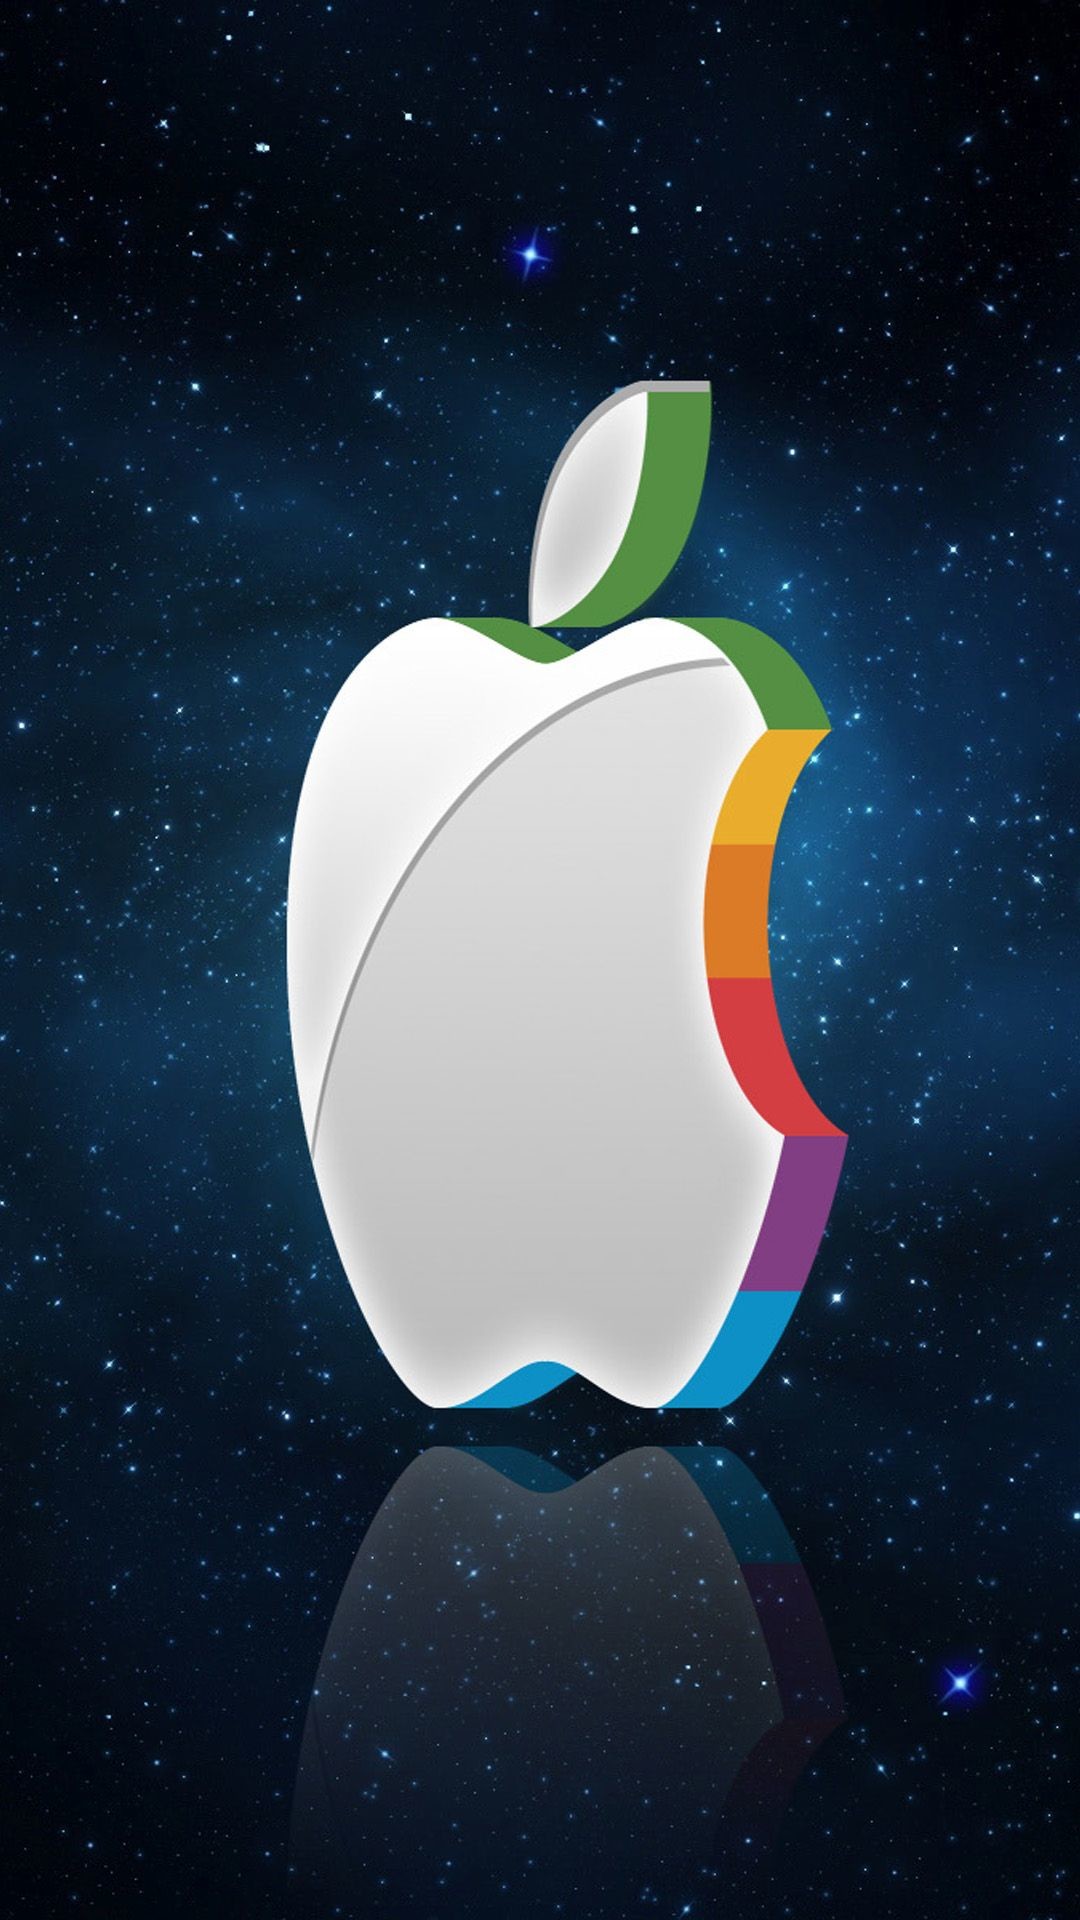 1080x1920 3d-iphone-wallpaper--3D-Apple-logo-in-